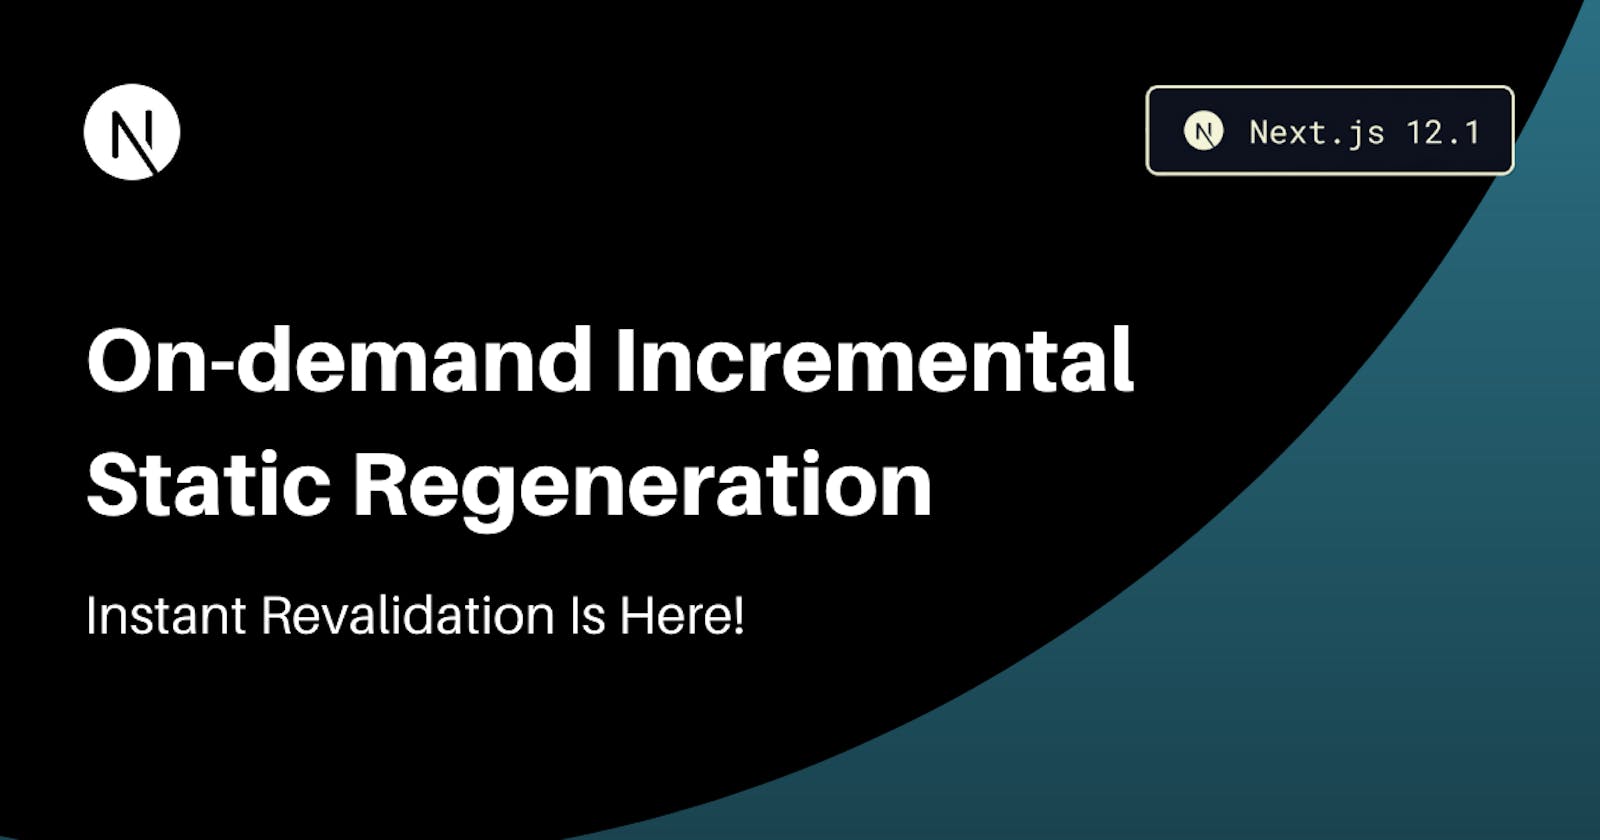 Next.js Releases On-demand Incremental Static Regeneration